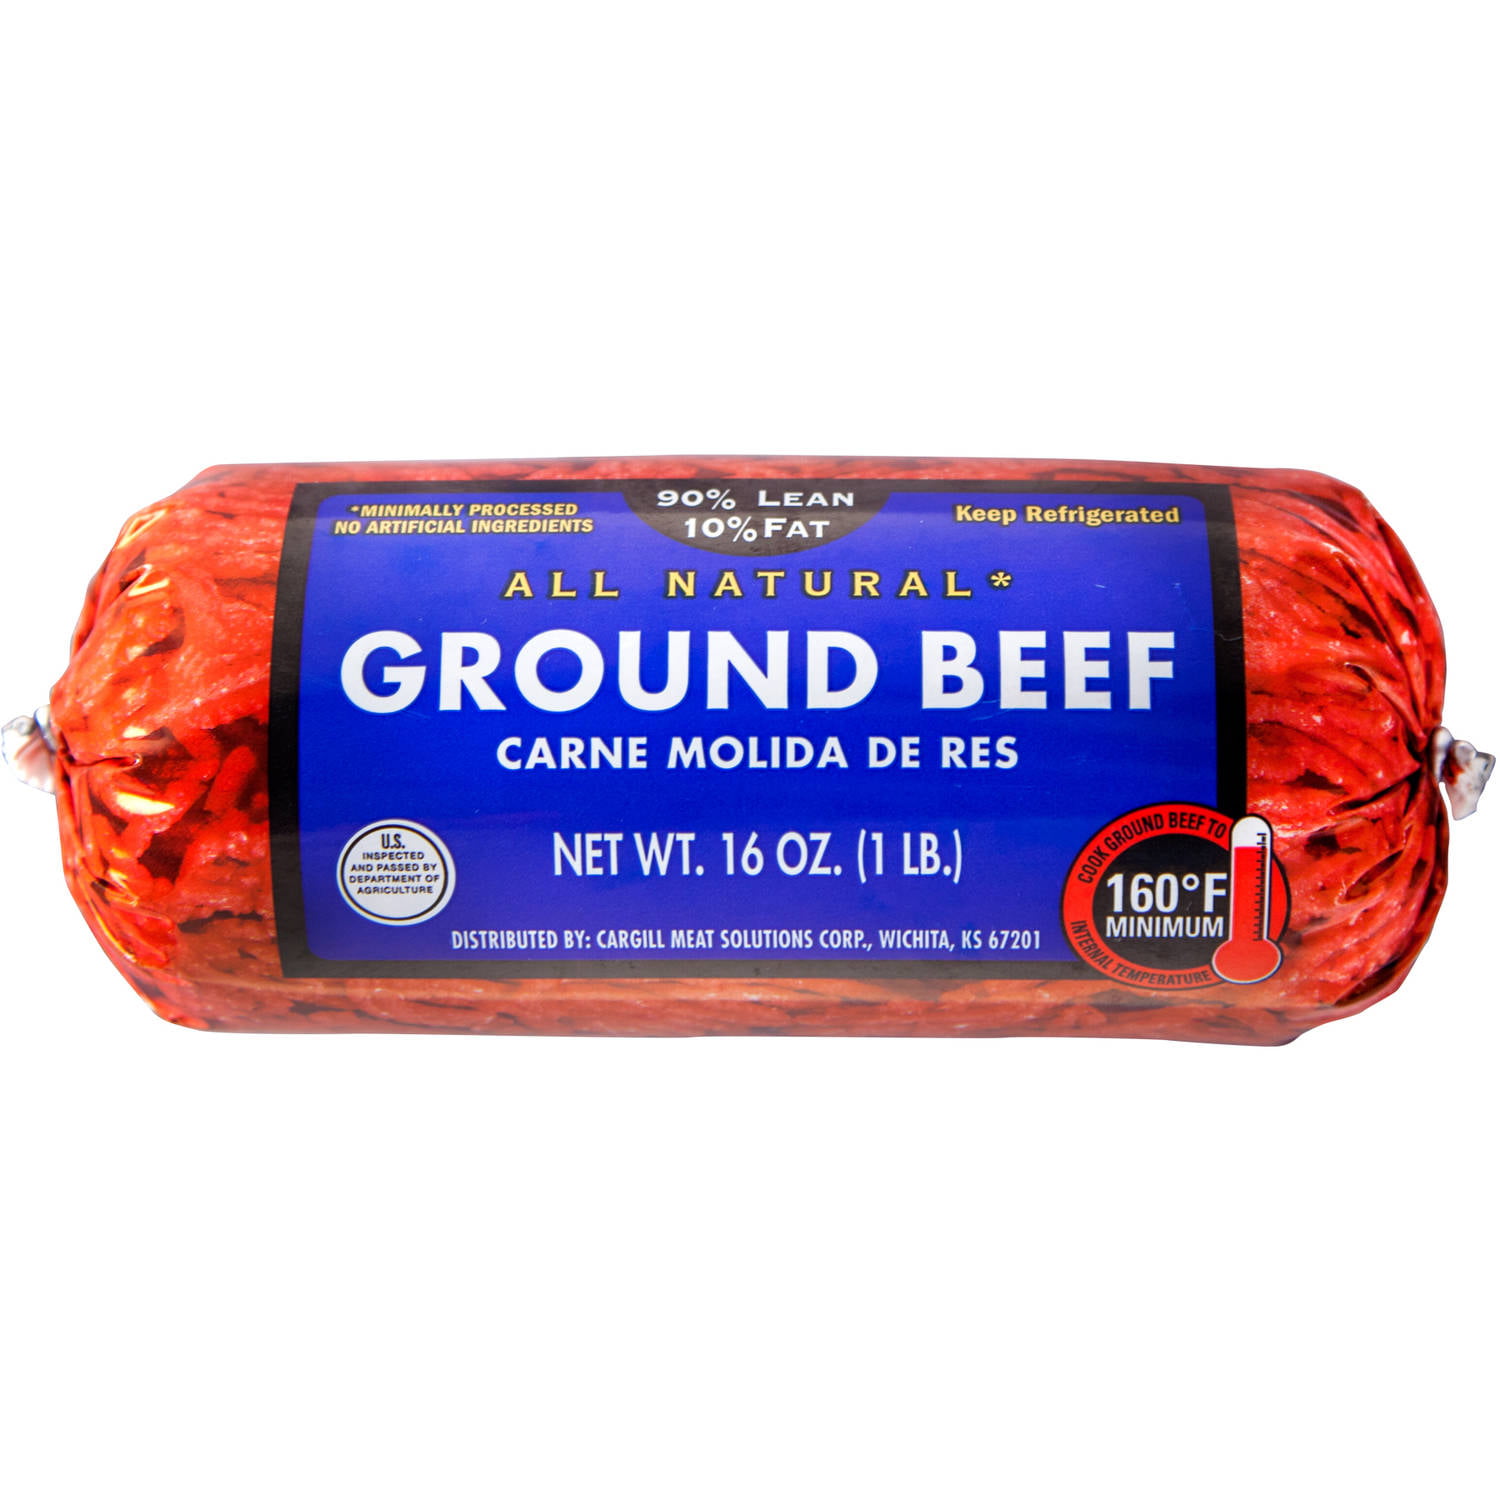 90 Lean 10fat Ground Beef Roll 1lb Walmart regarding Nutrition Facts 90 Lean Ground Beef